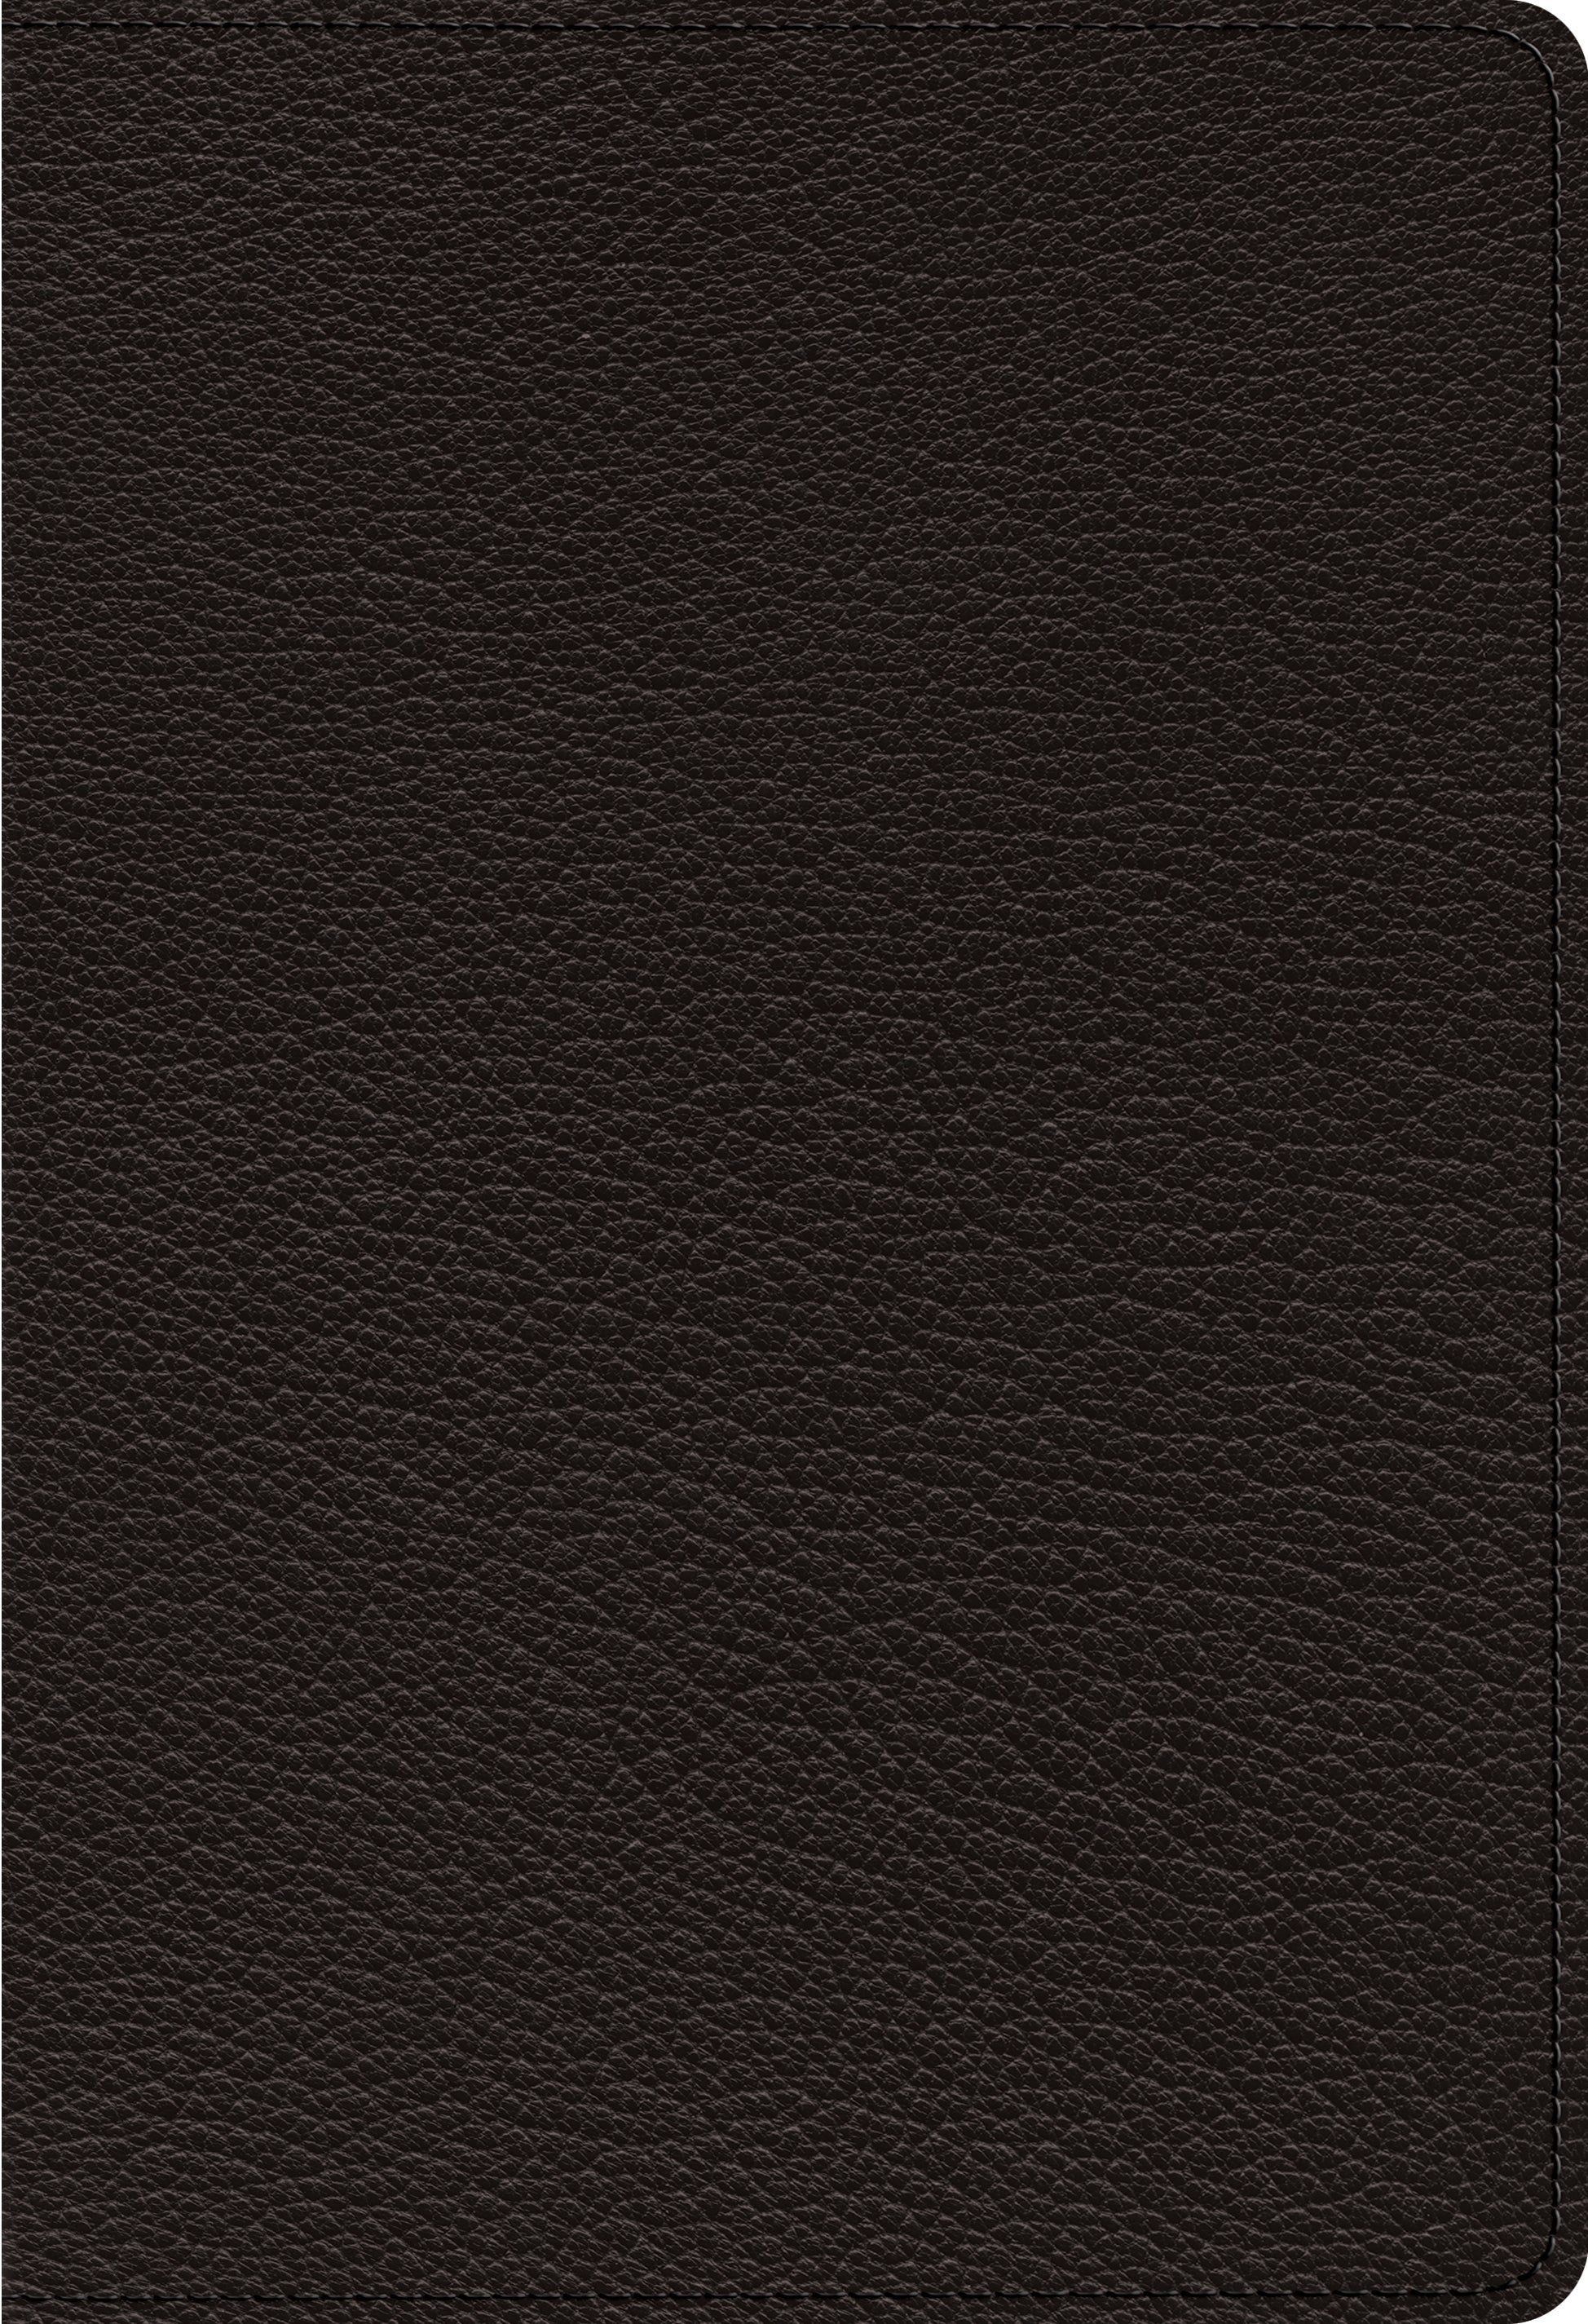 Image of ESV Heirloom Single Column Personal Size Bible (Goatskin, Black) other